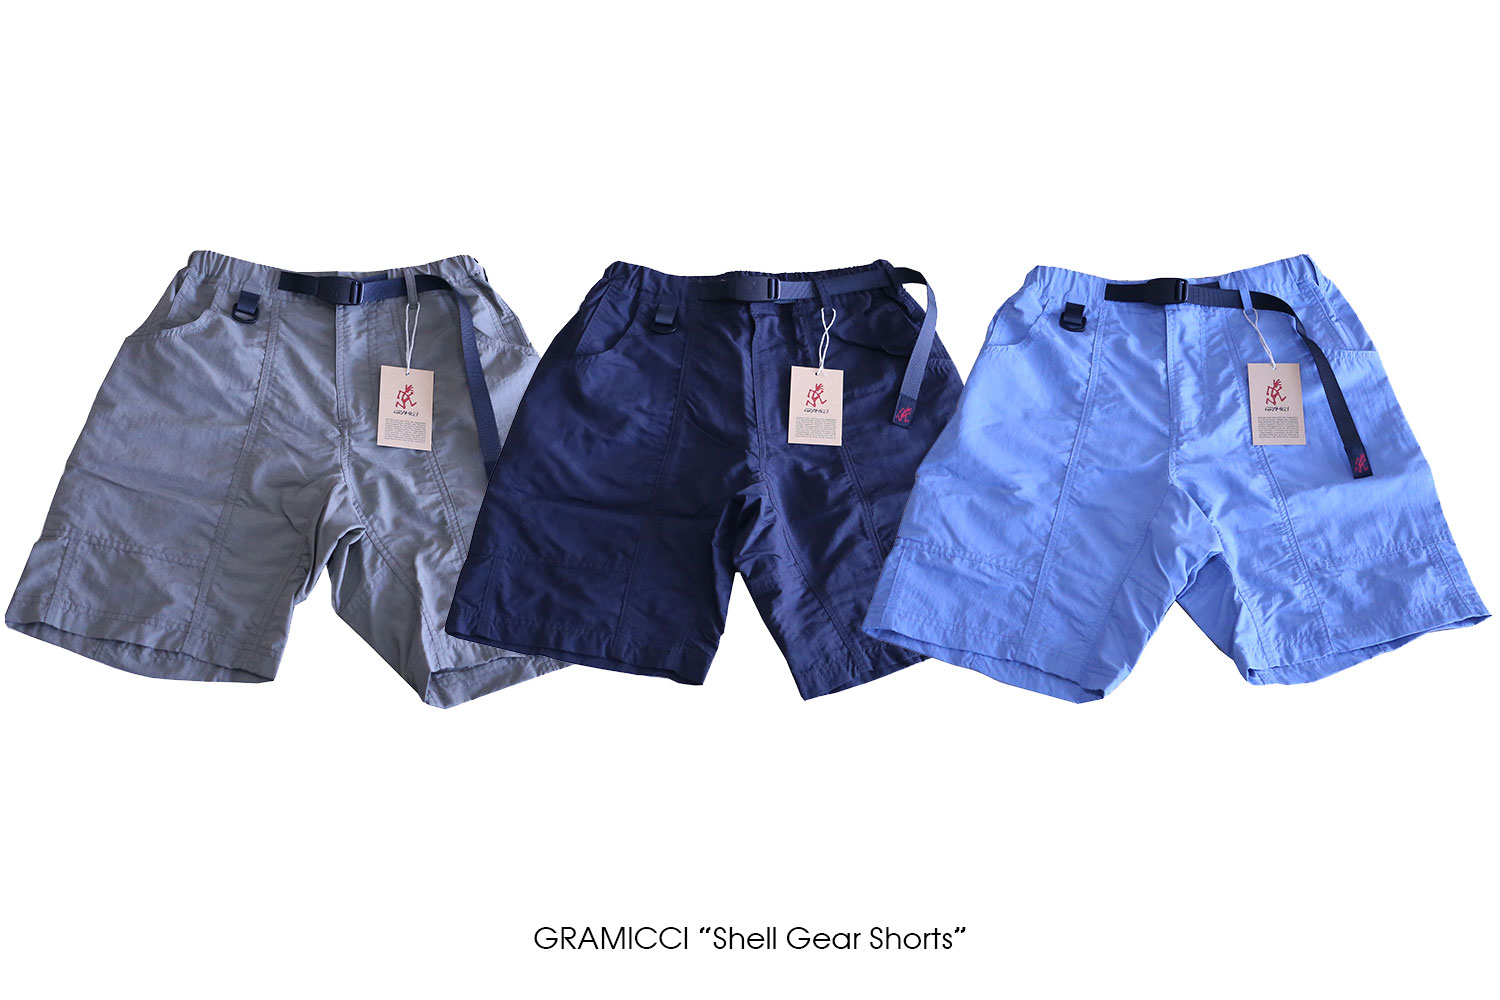 GRAMICCI "Shell Gear Shorts"